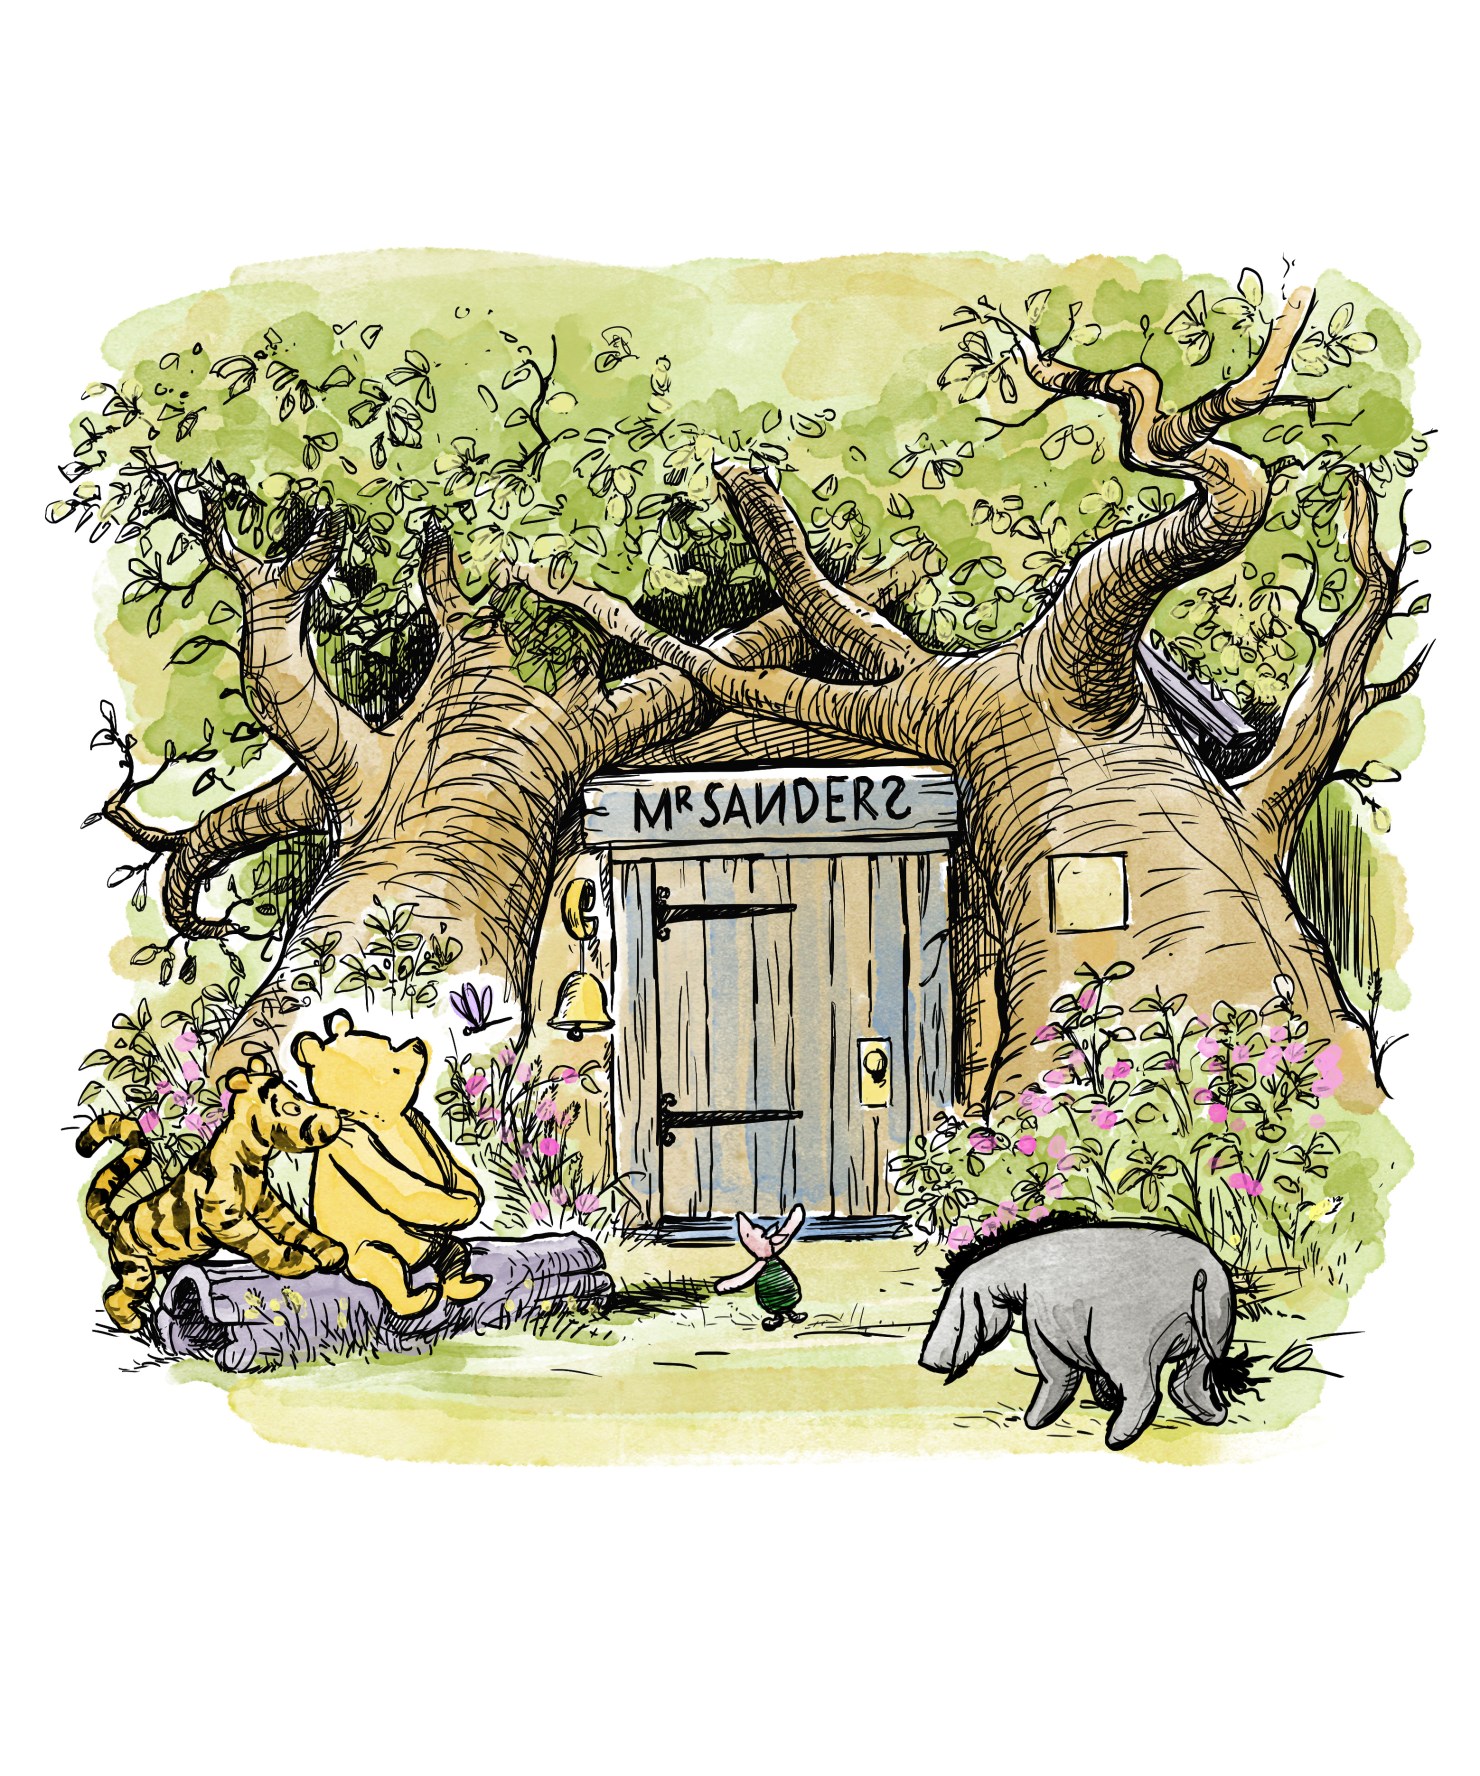 Winnie the Pooh illustrator, Kim Raymond's color illustration of the Winnie the Pooh house, including sketches of Pooh, Tigger, Piglet and Eyore.